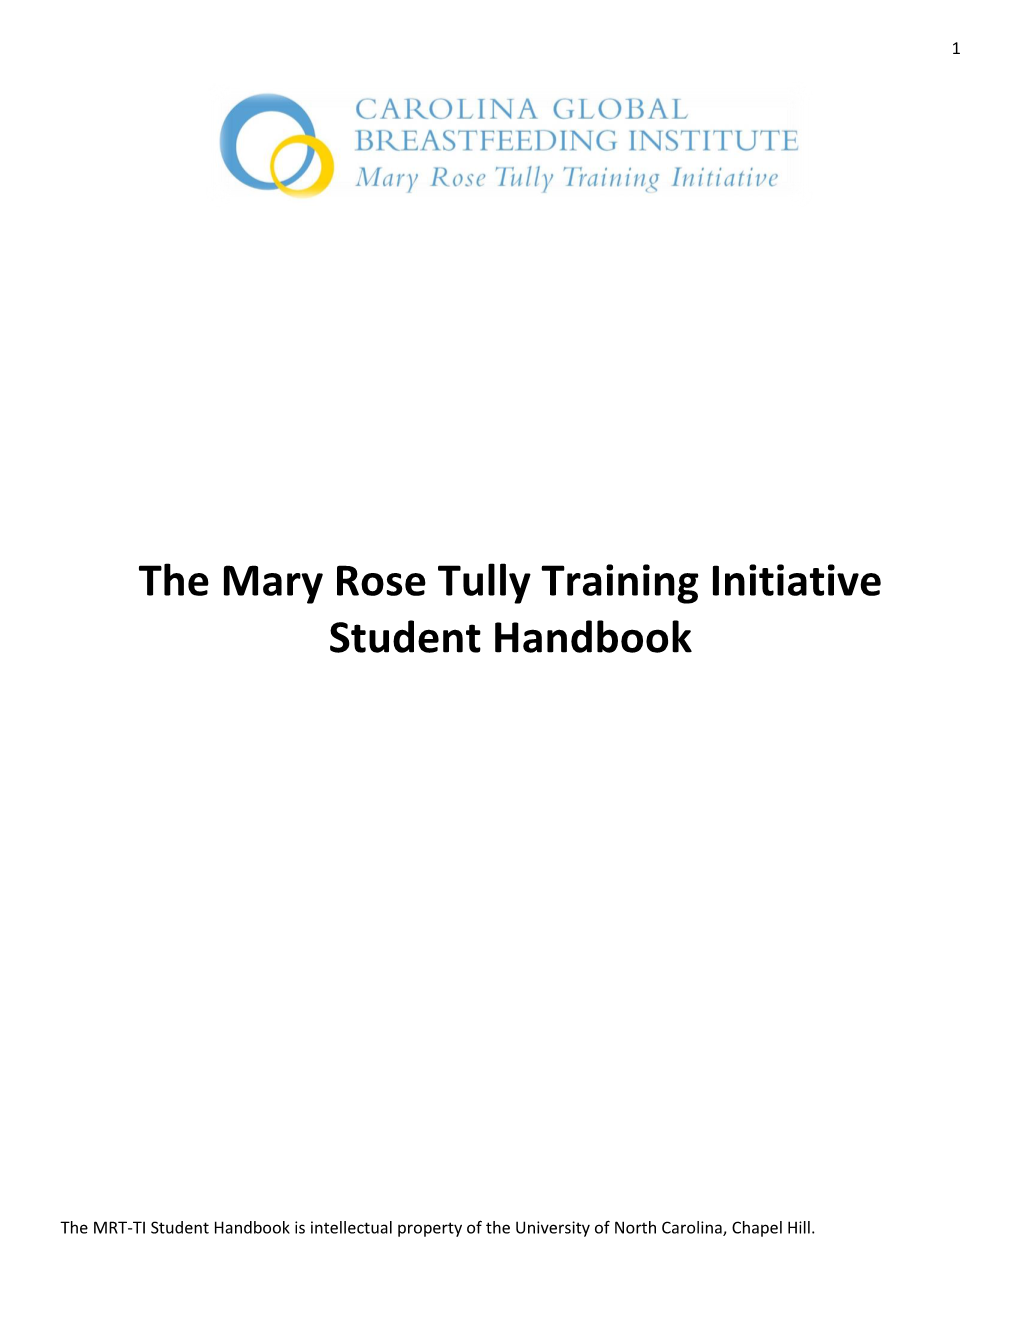 The Mary Rose Tully Training Initiative Student Handbook